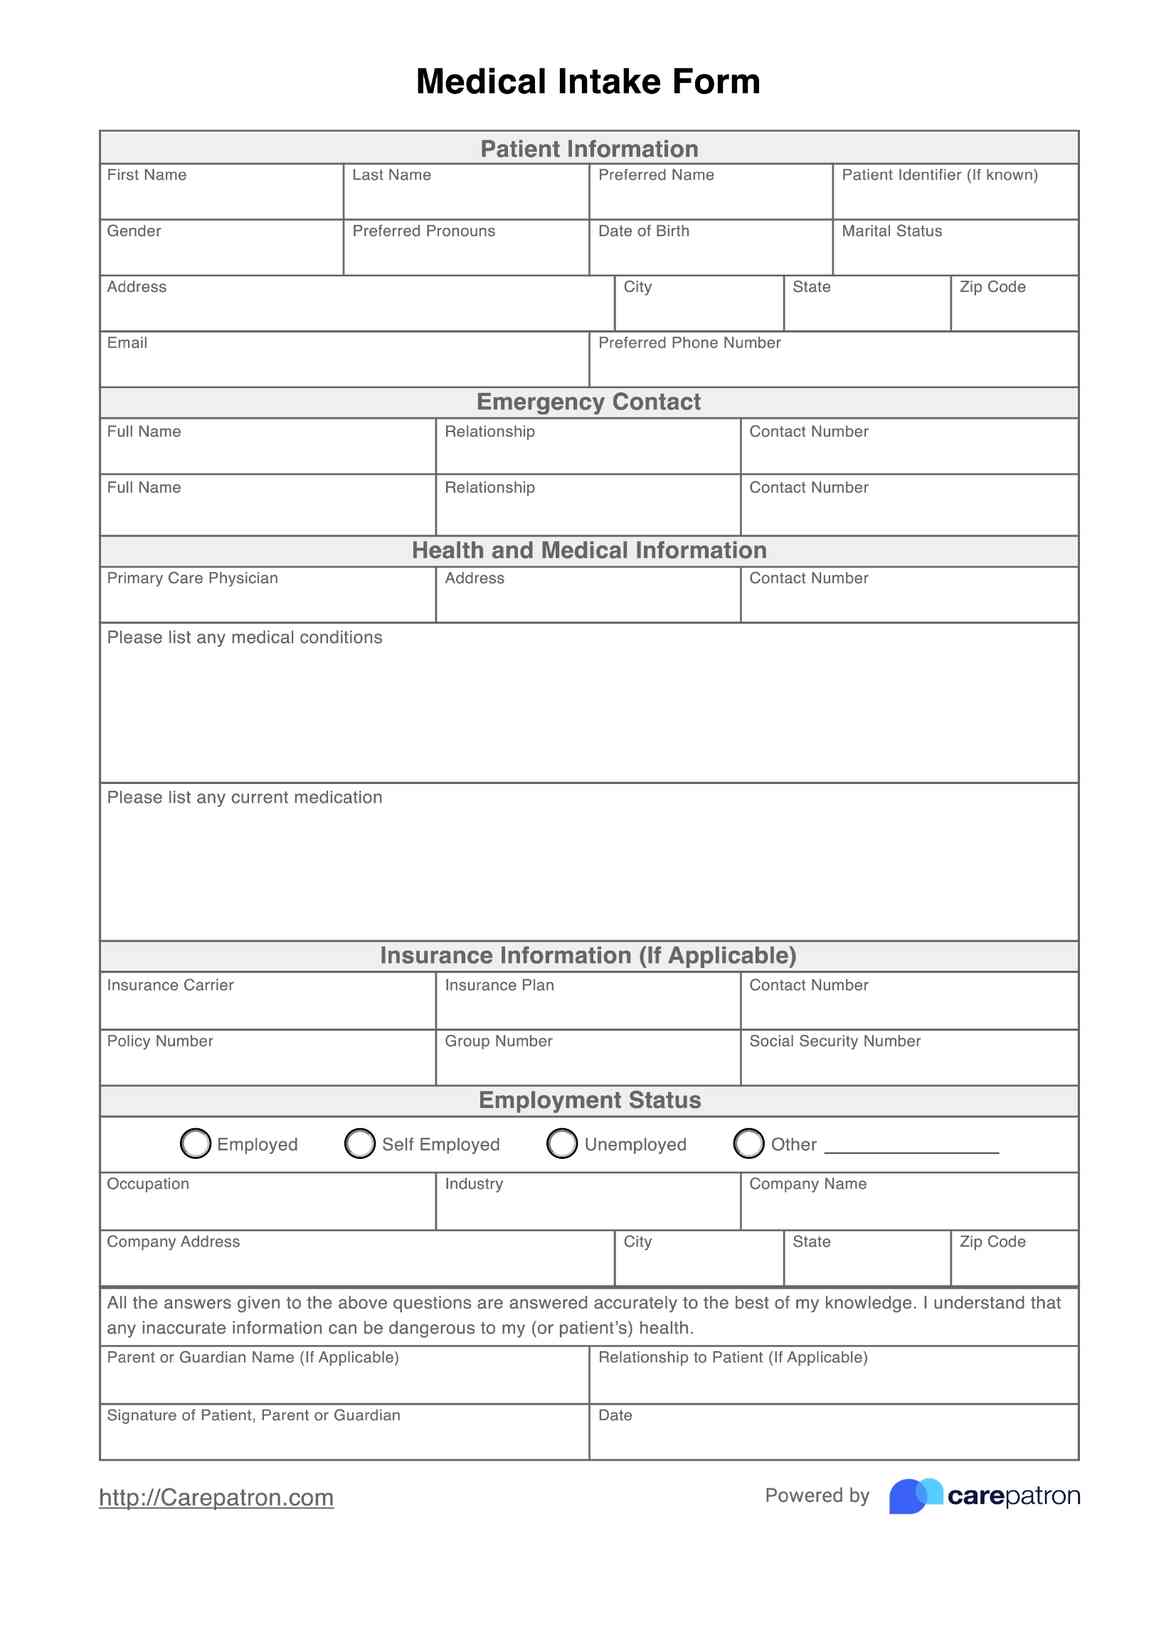 Medical Intake Form PDF Example